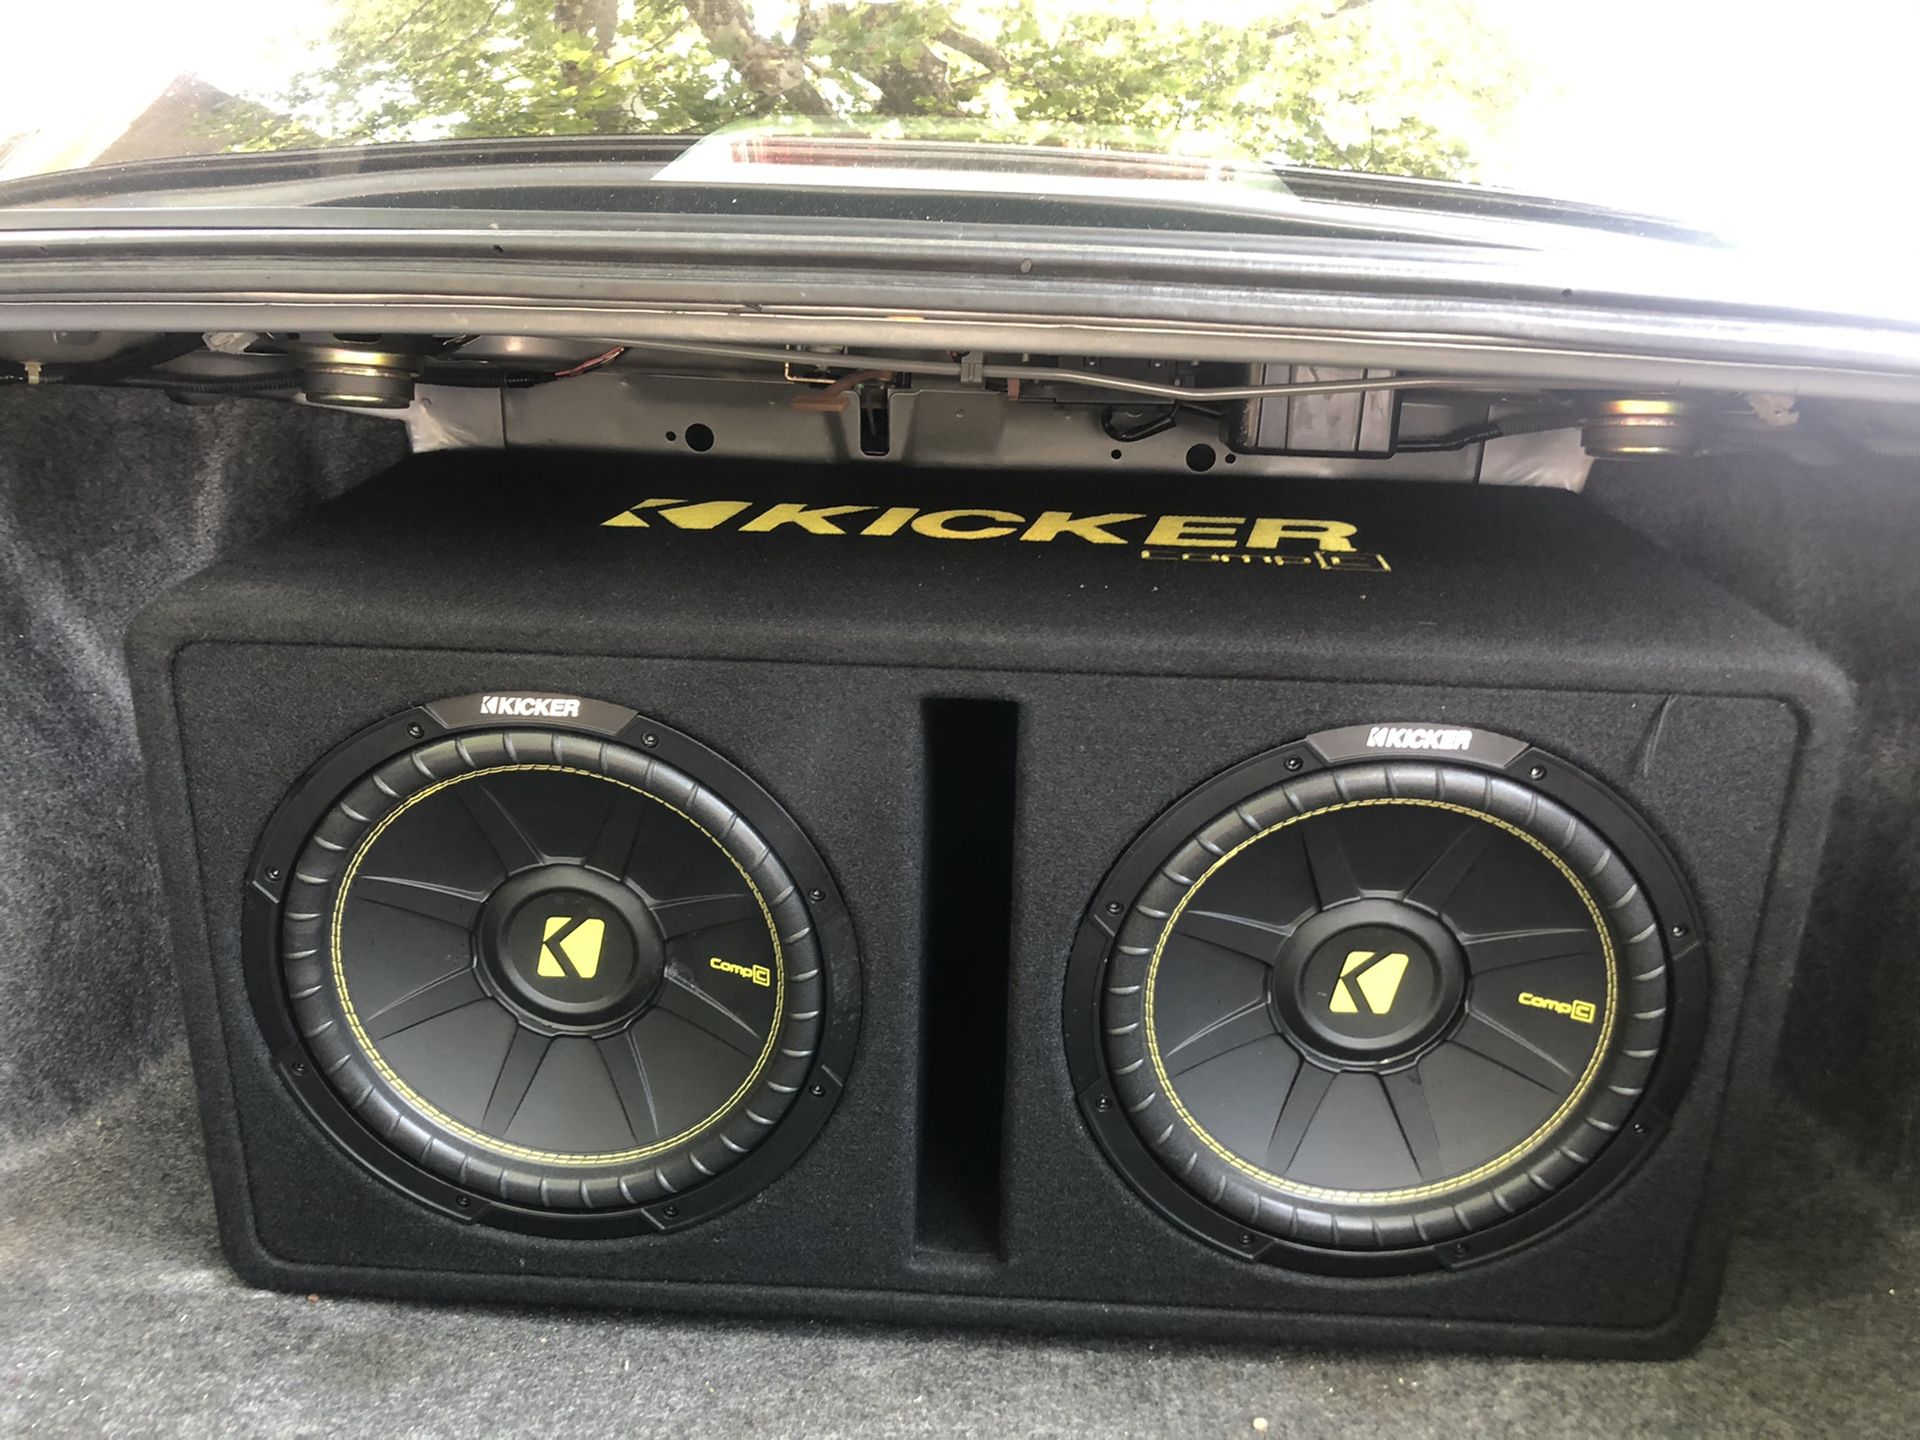 Kicker 12 Inch Car Subwoofer and Subwoofer amplifier